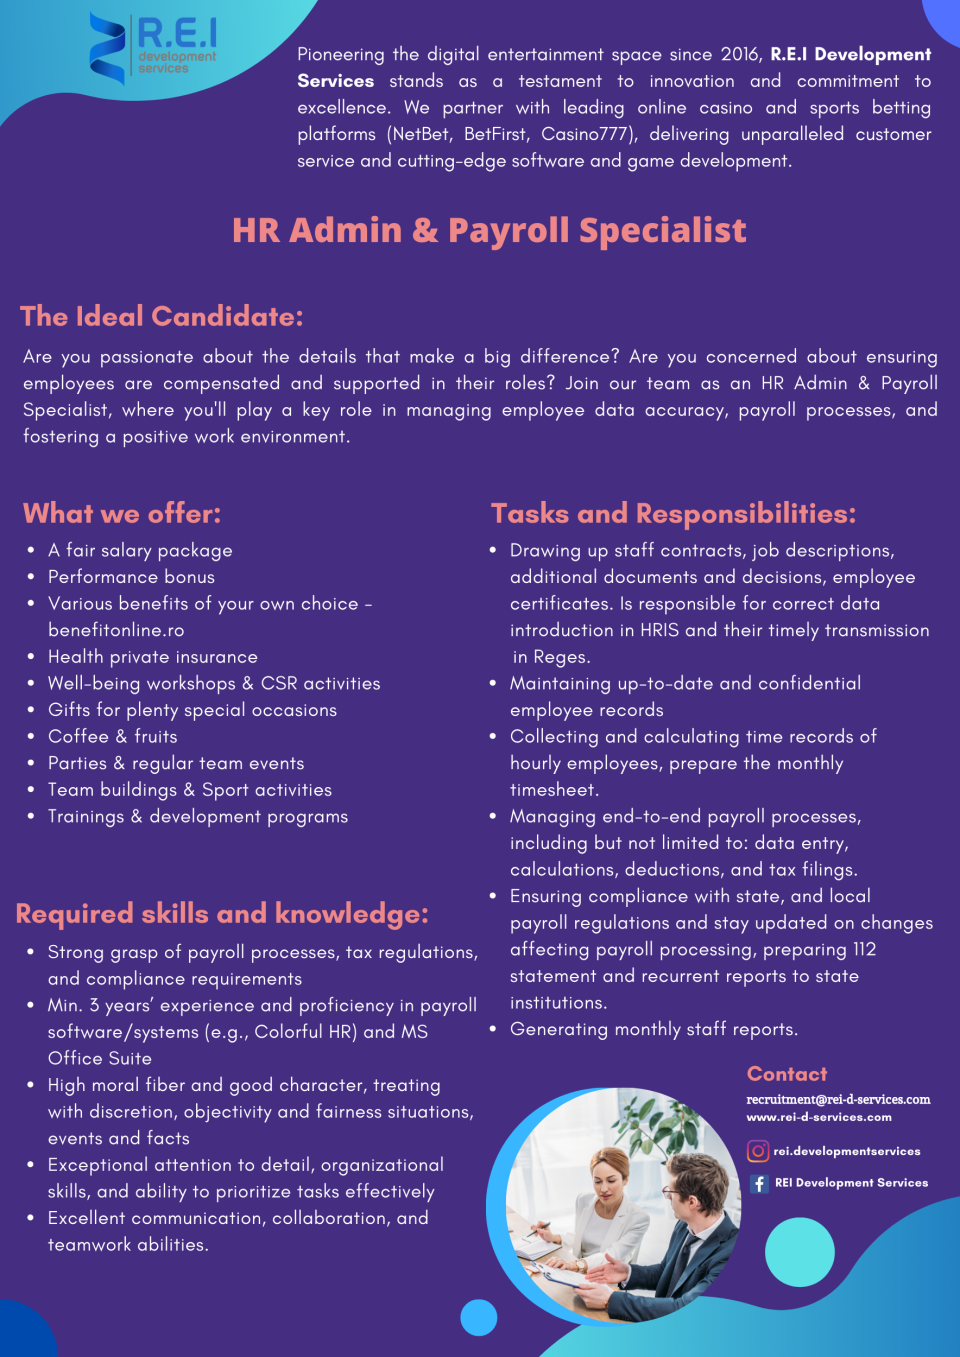 HR Admin & Payroll Specialist